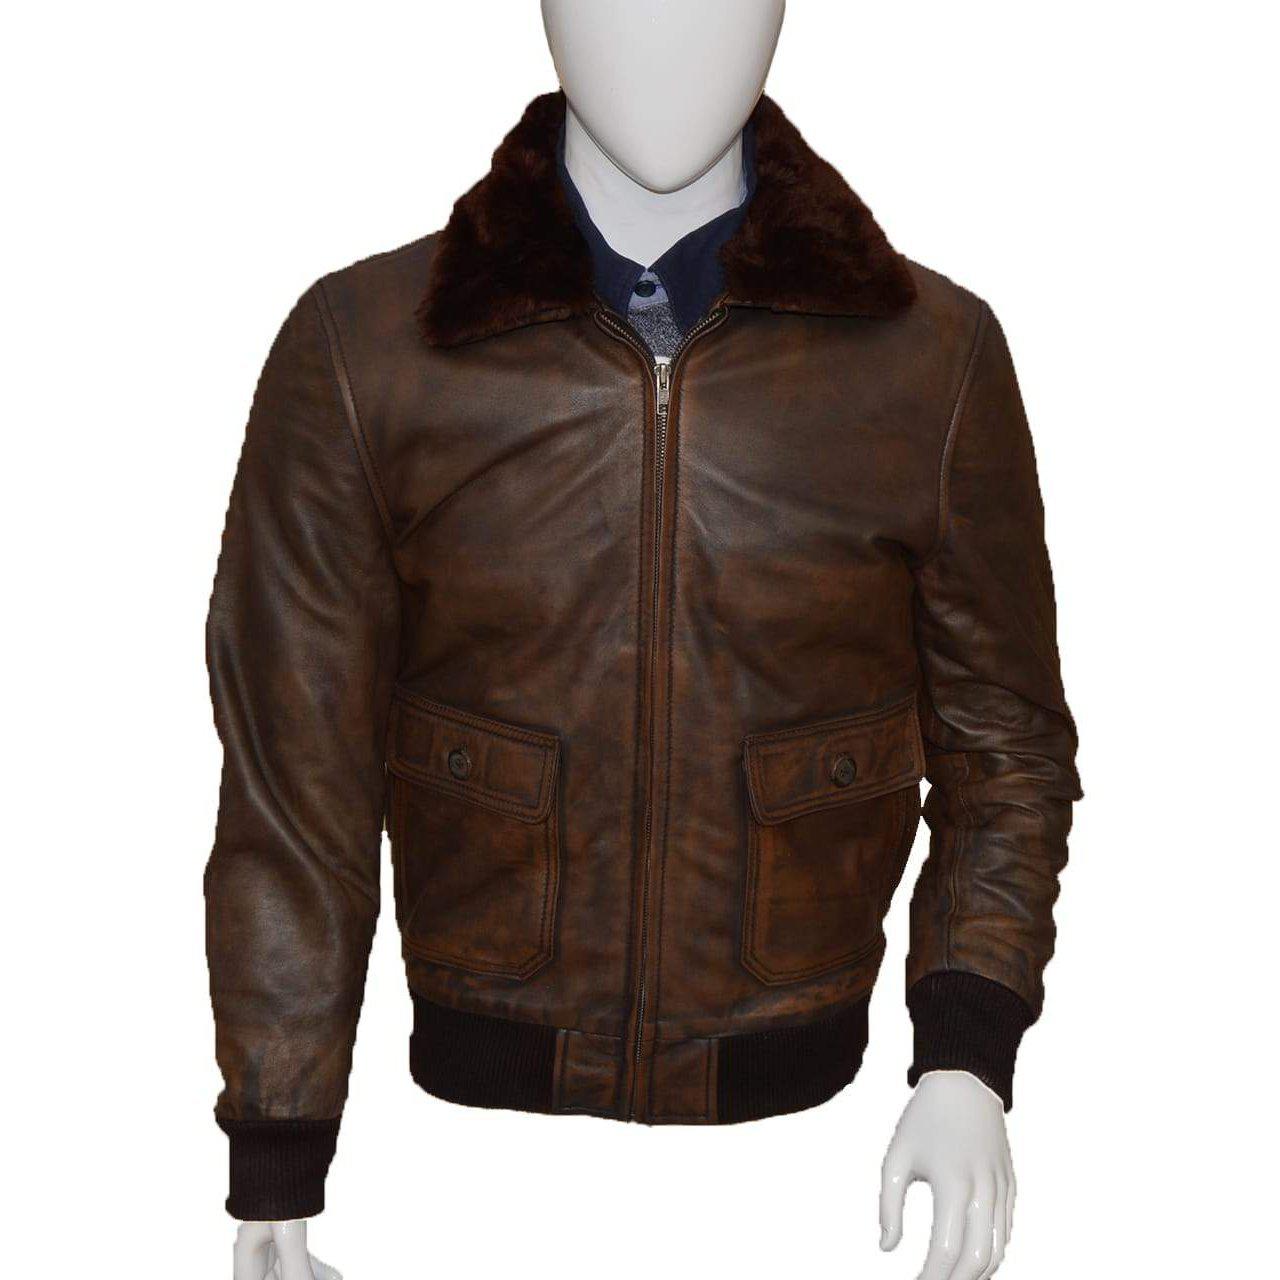 III-Fashions Men's Distressed Lambskin Leather Biker Jacket